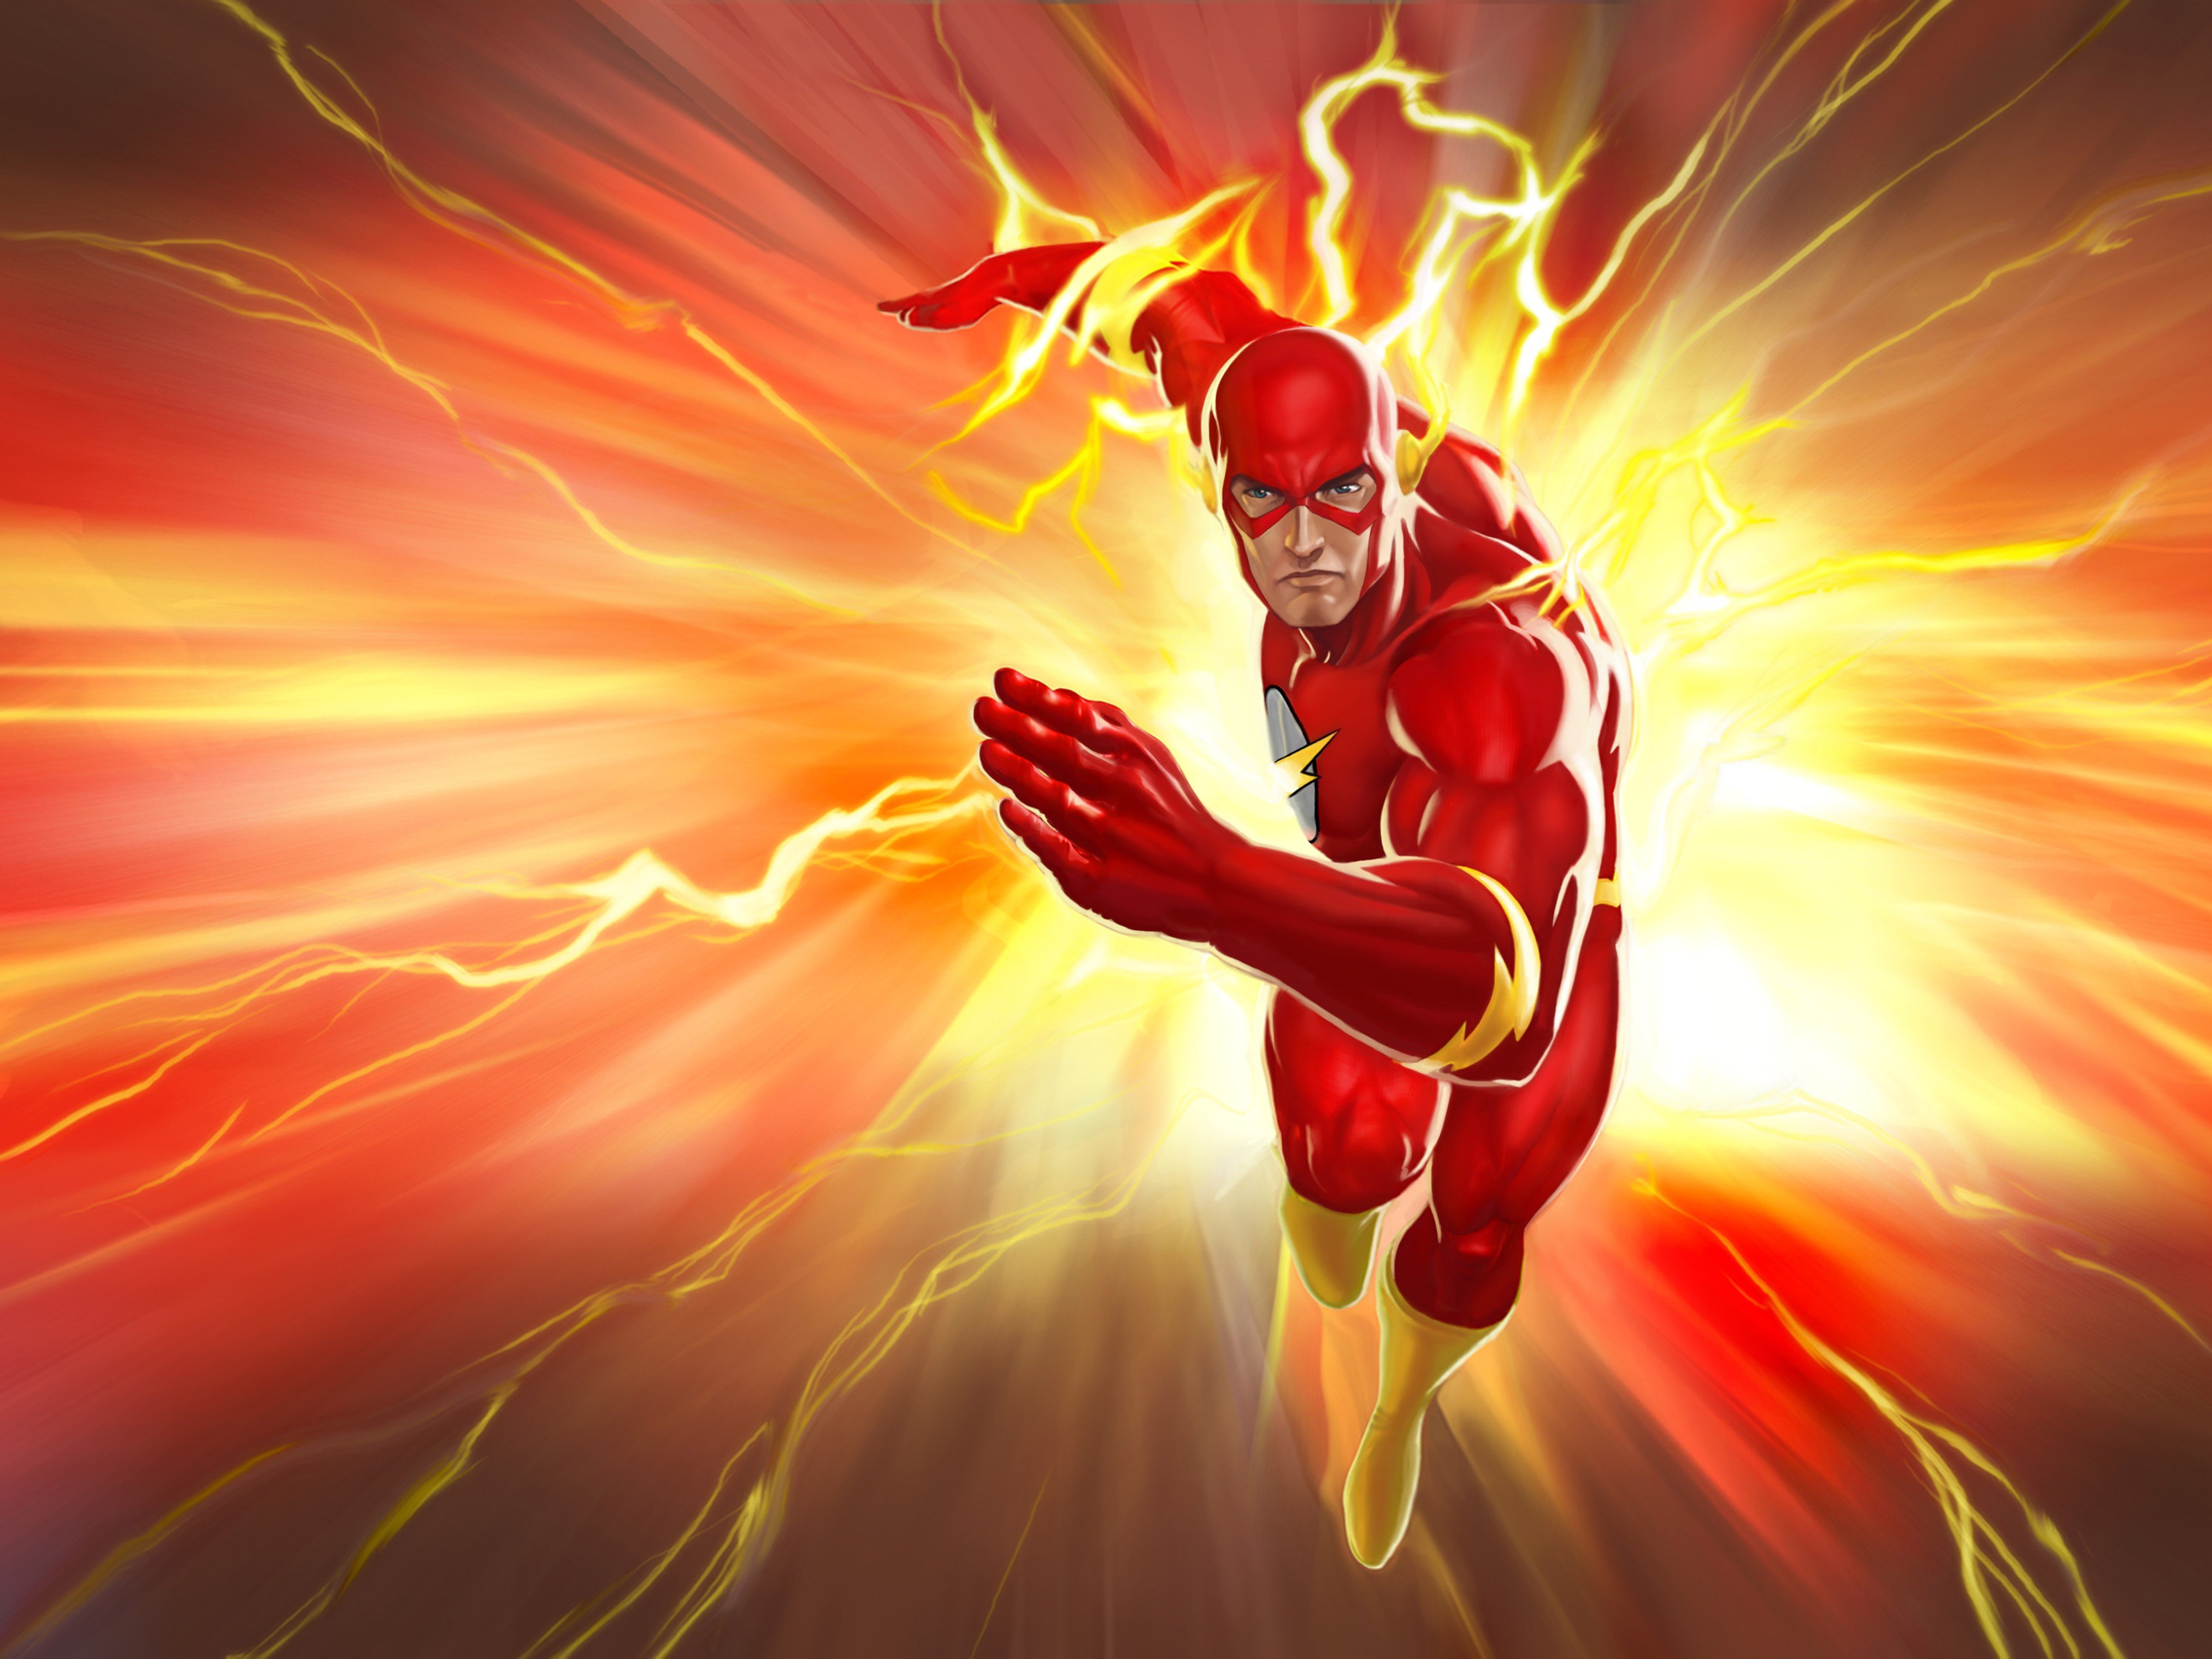 Descarga gratuita de fondo de pantalla para móvil de The Flash, Historietas.